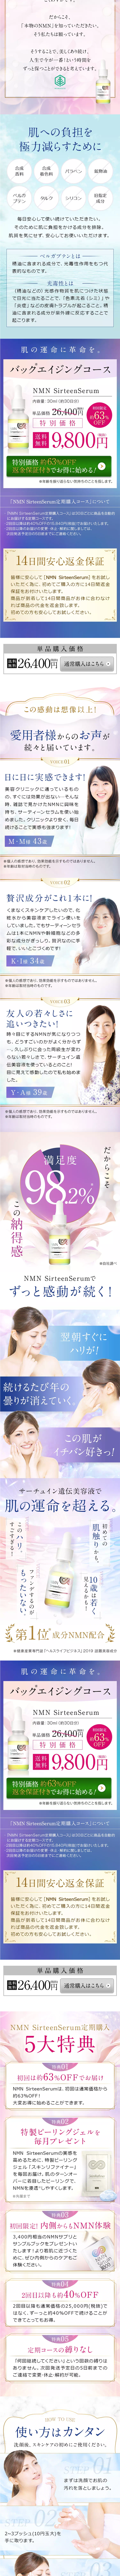 NMN SirteenSerum_pc_3